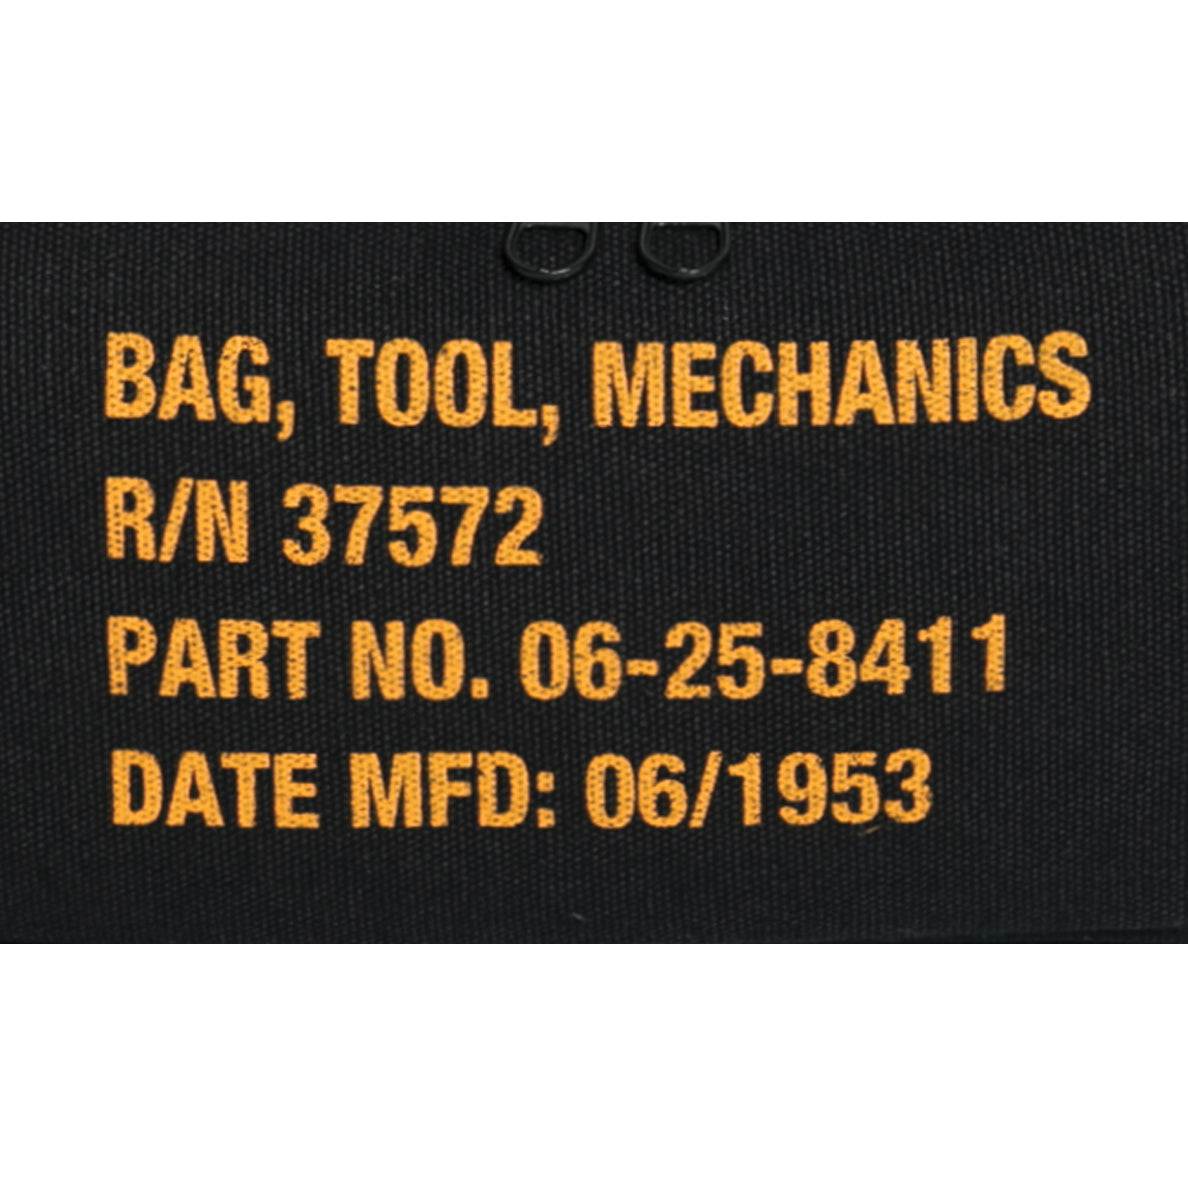 Rothco G.I. Type Mechanics Tool Bag With Stencil